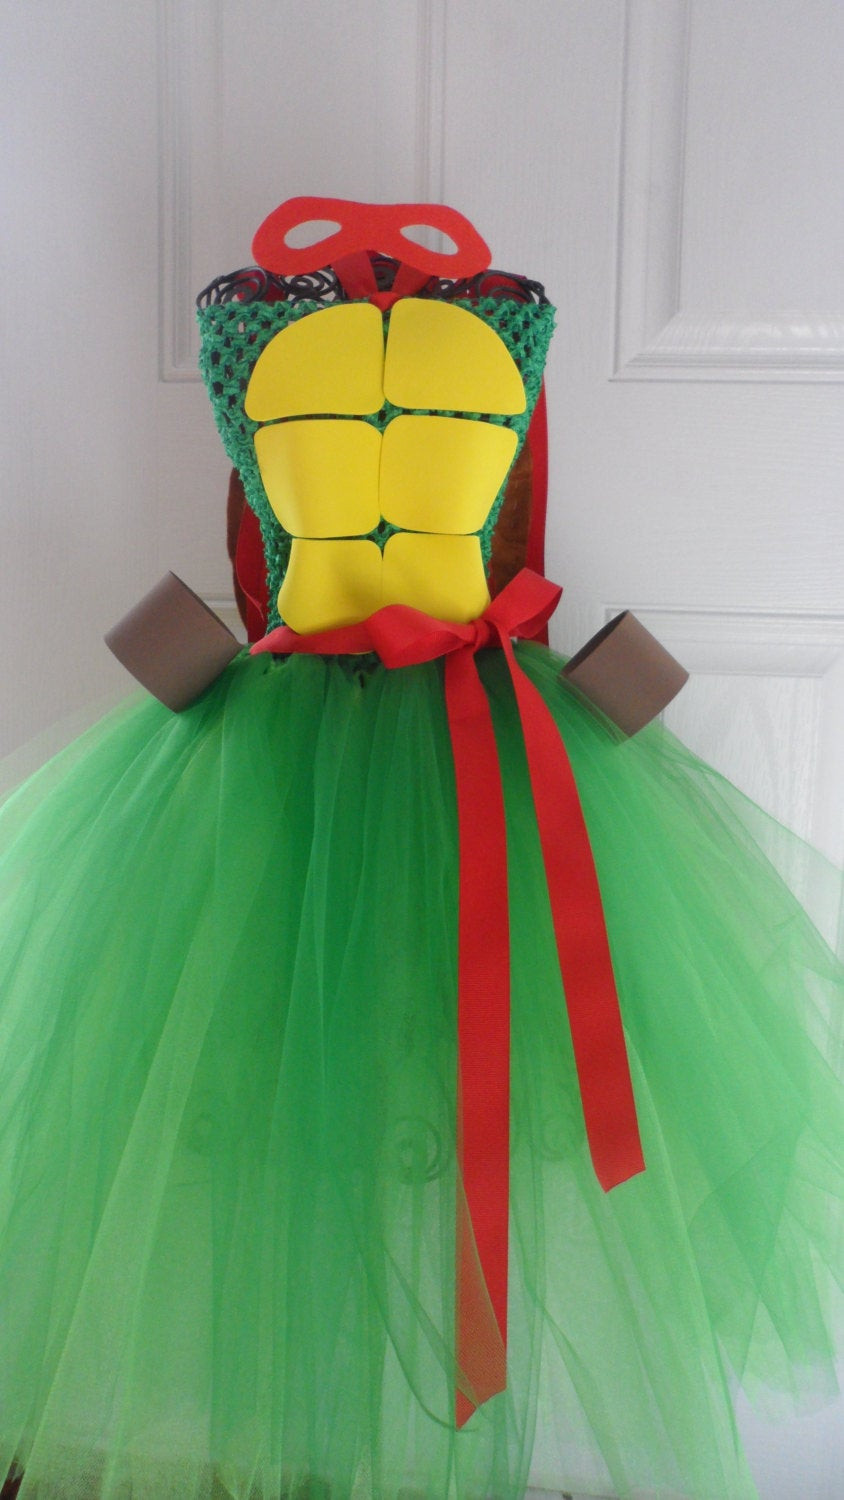 Best ideas about DIY Ninja Turtle Costume With Tutu
. Save or Pin Ninja Turtle Tutu Dress Now.